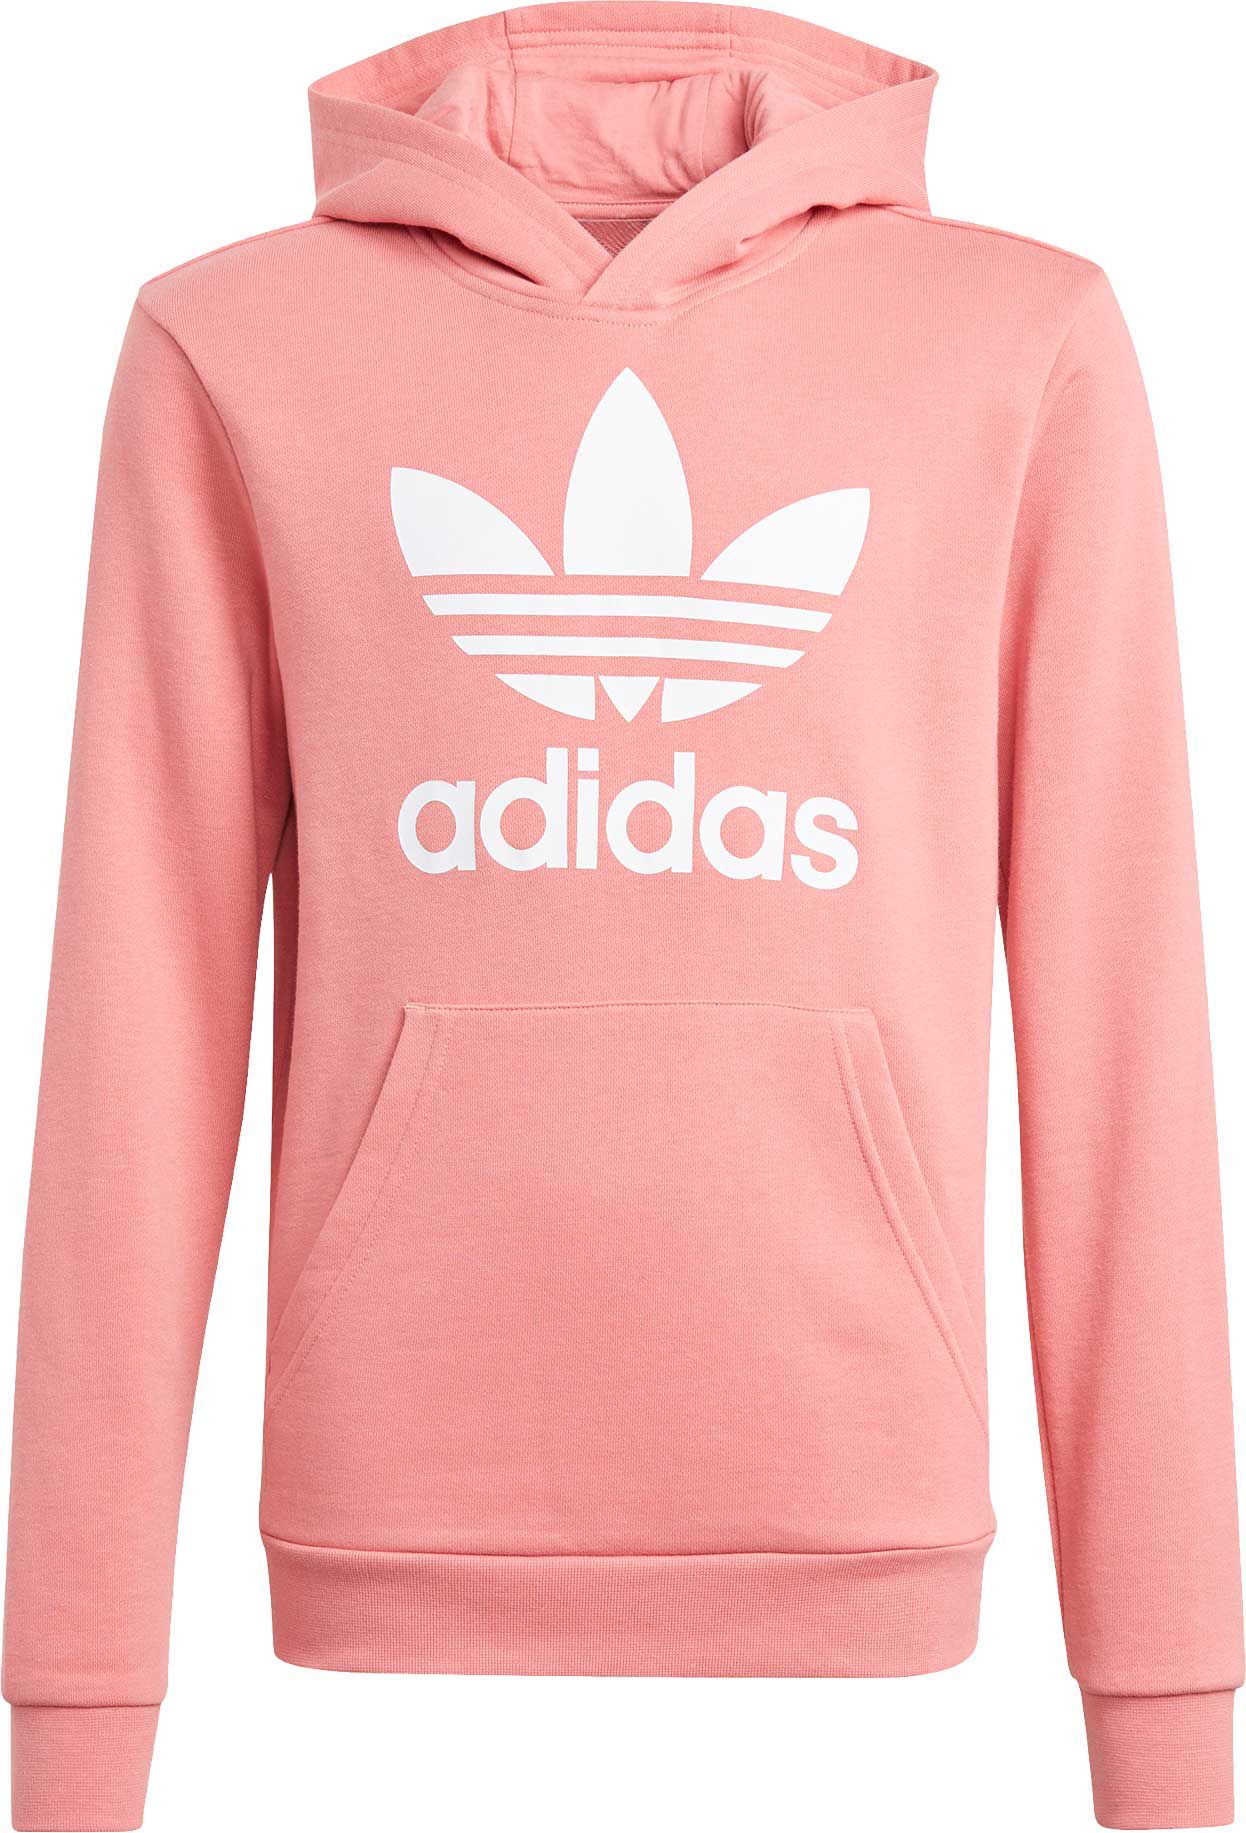 mens pink adidas sweatshirt